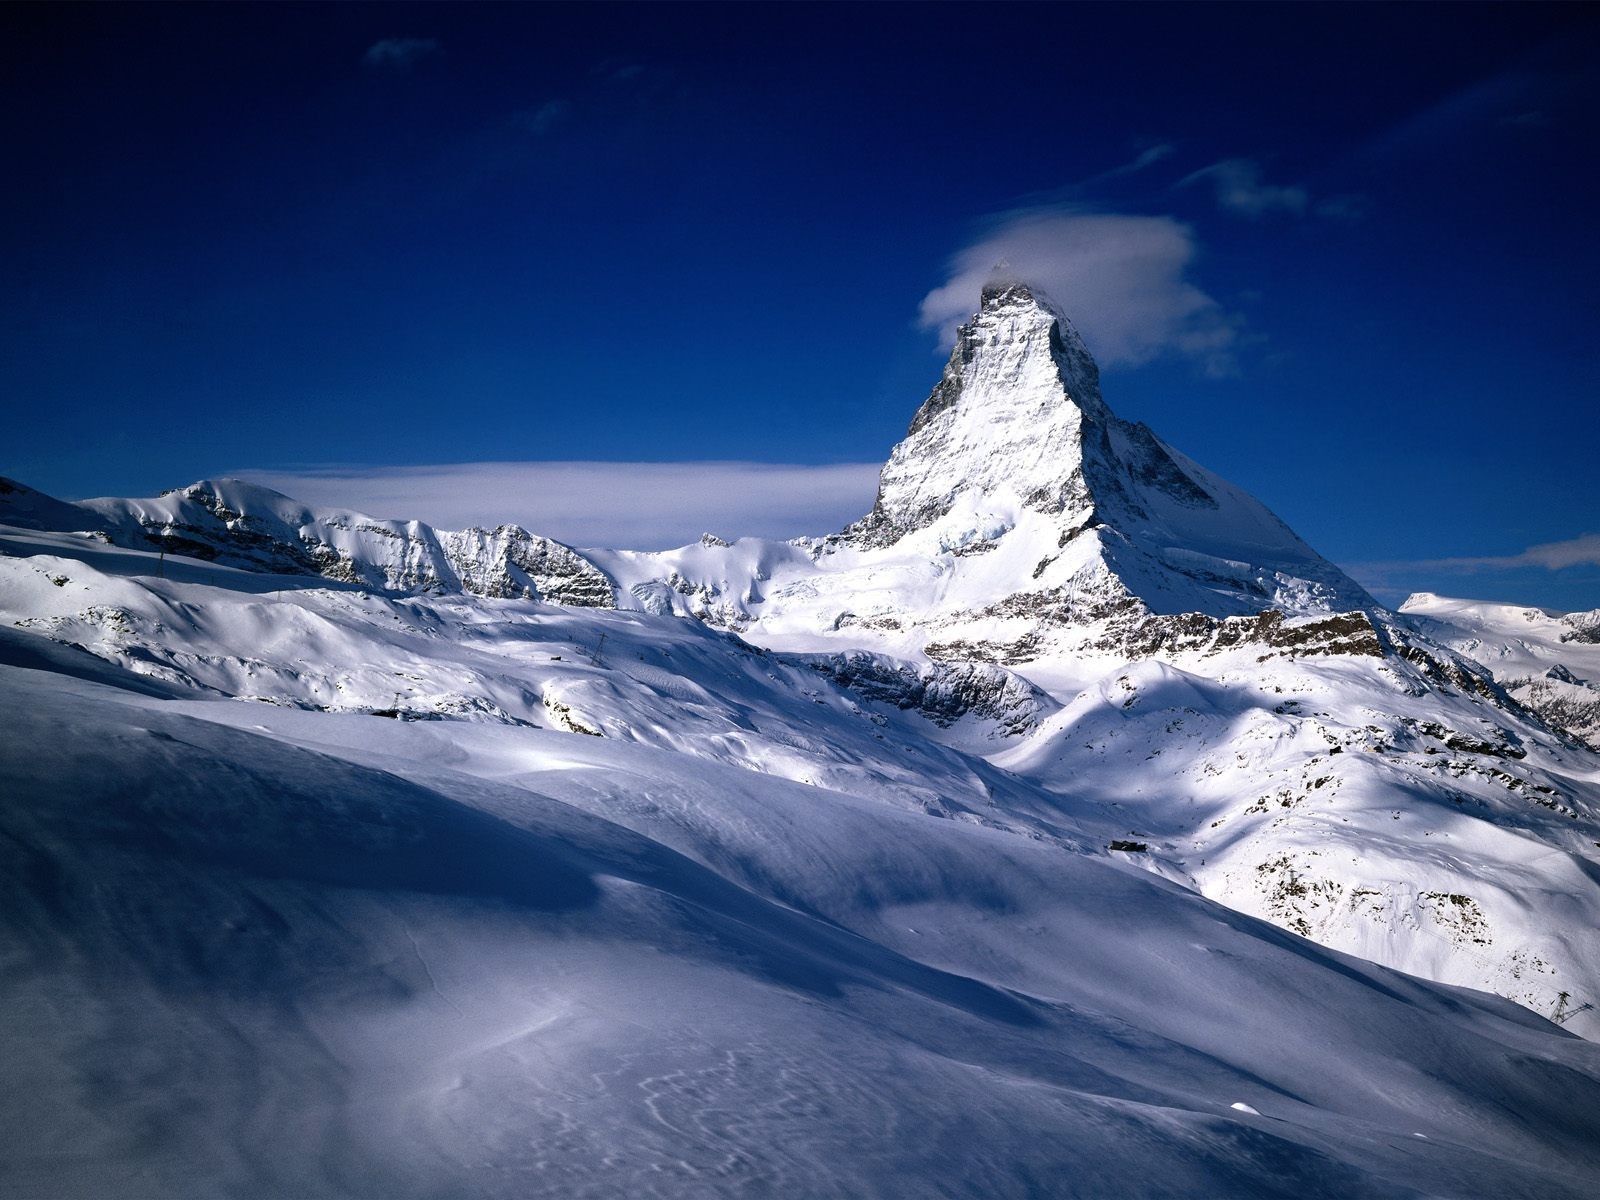 General 1600x1200 landscape Matterhorn Switzerland snow ice cold nature mountains